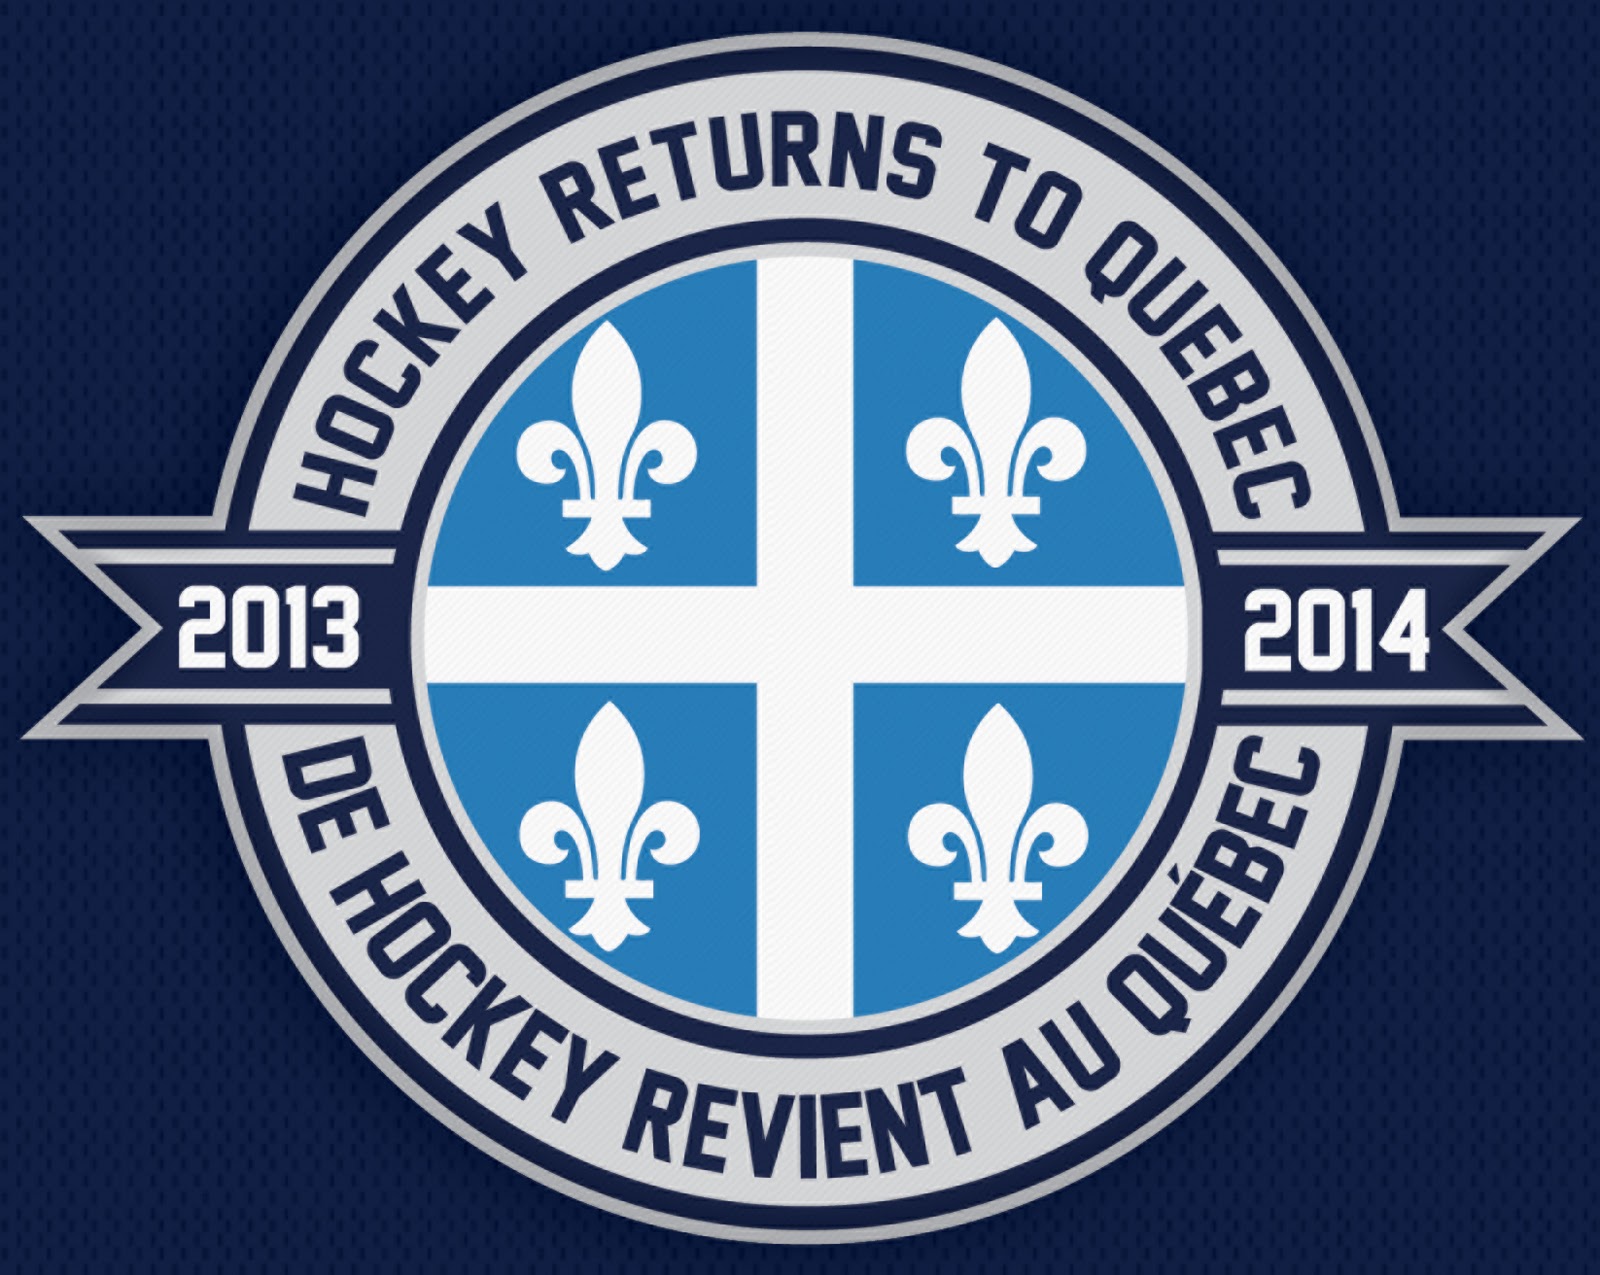 Presenting Your Quebec Nordiques Revival Team! : r/EA_NHL